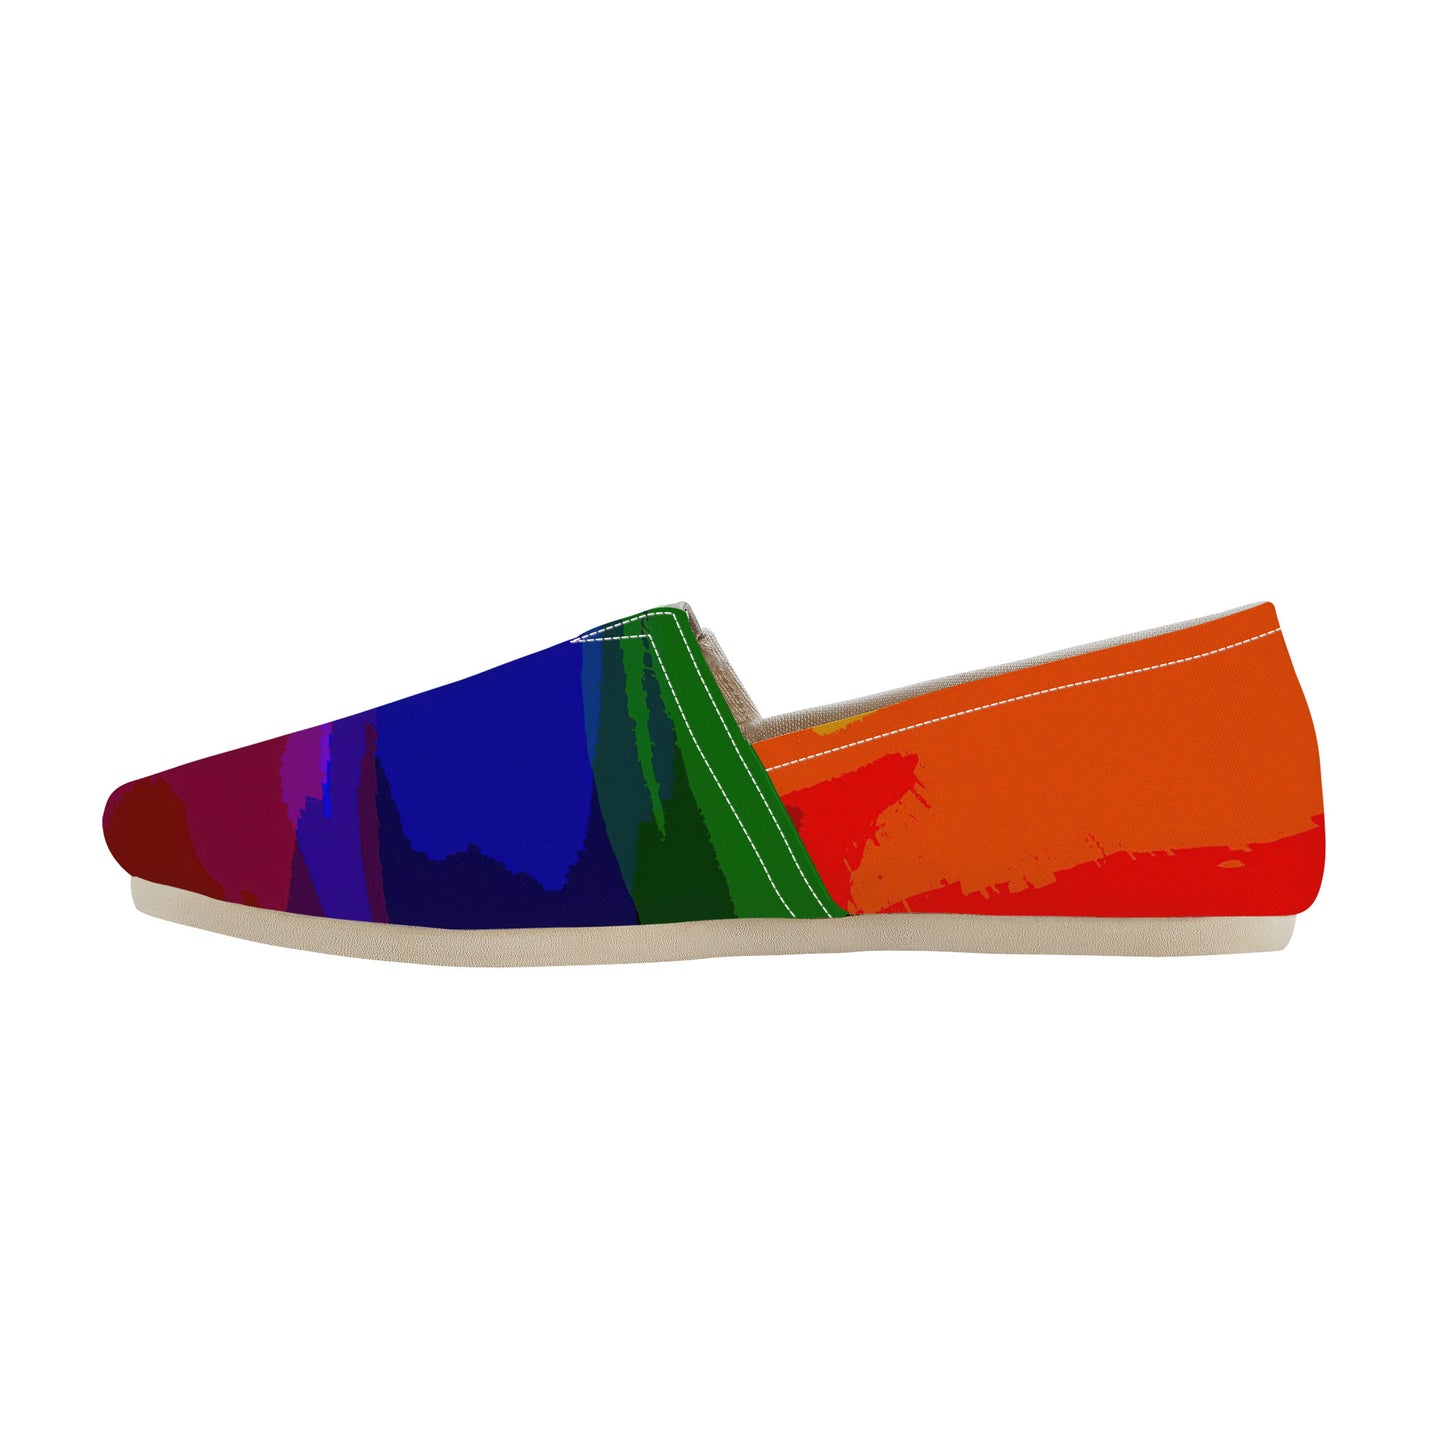 Casual Rainbow Casual Flat Driving Shoe